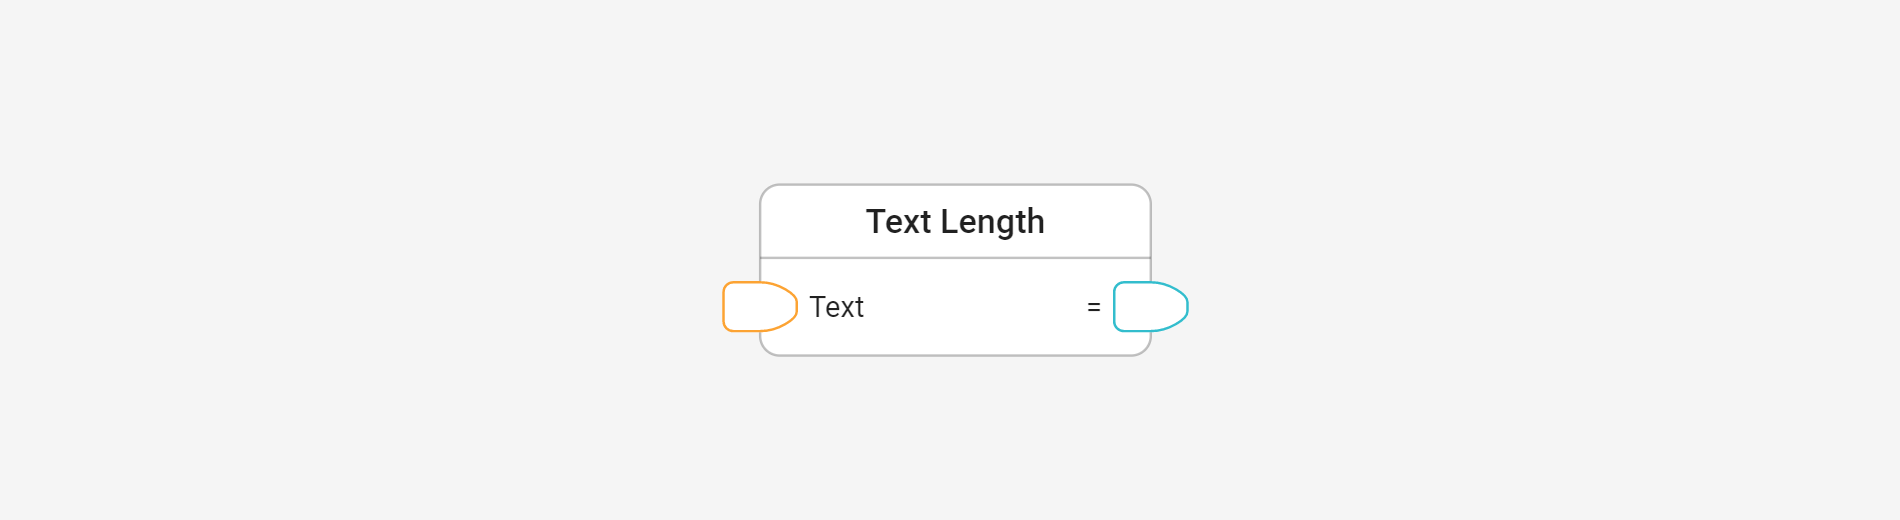 Get text length in Centrldesk